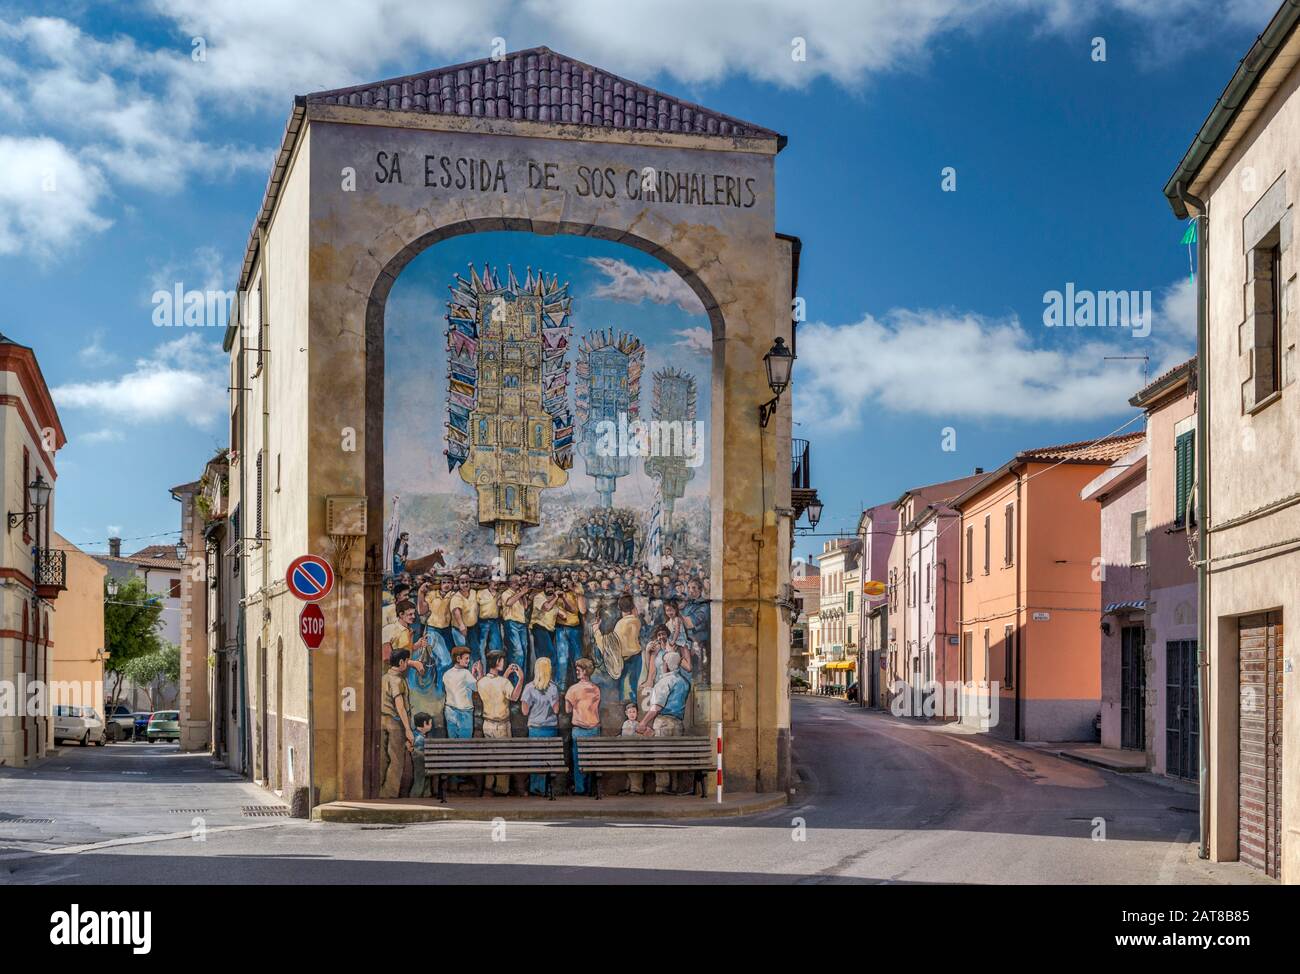 Mural with Sardinian language inscription, commemorating the annual religious procession, in town of Nulvi, Anglona, Sassari province, Sardinia, Italy Stock Photo